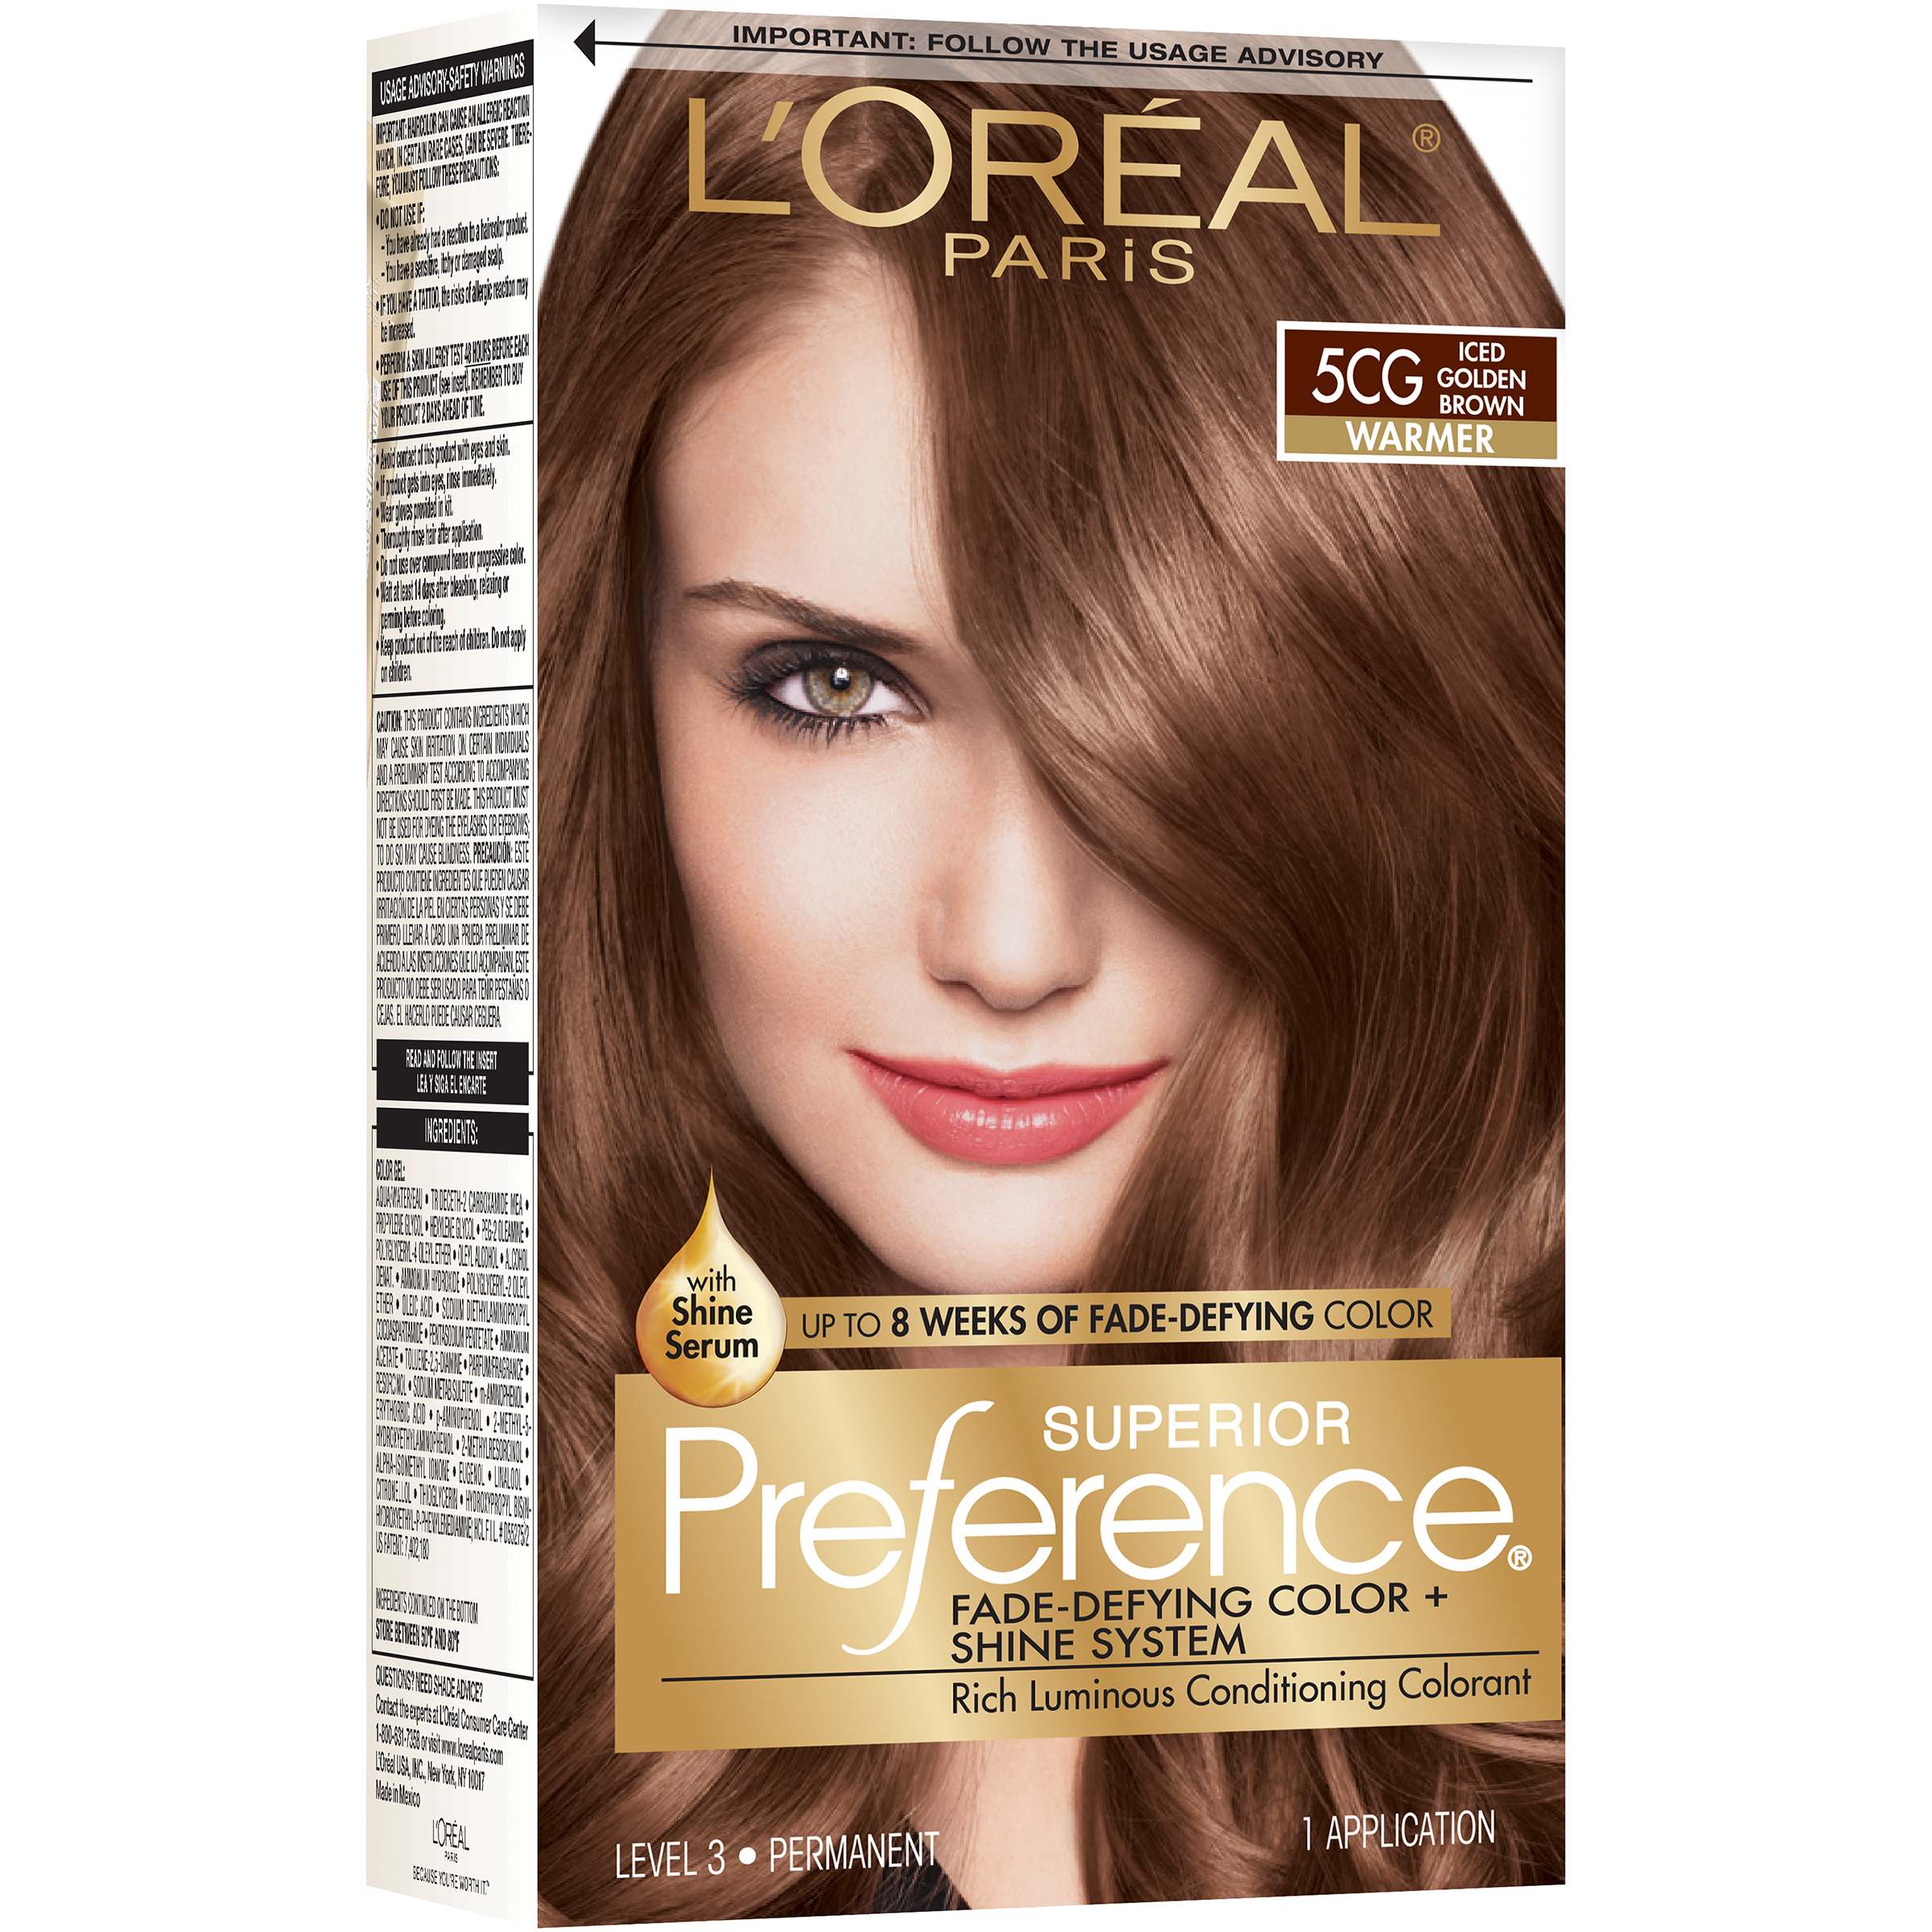 L'Oreal Paris® Superior Preference® Hair Color Kit